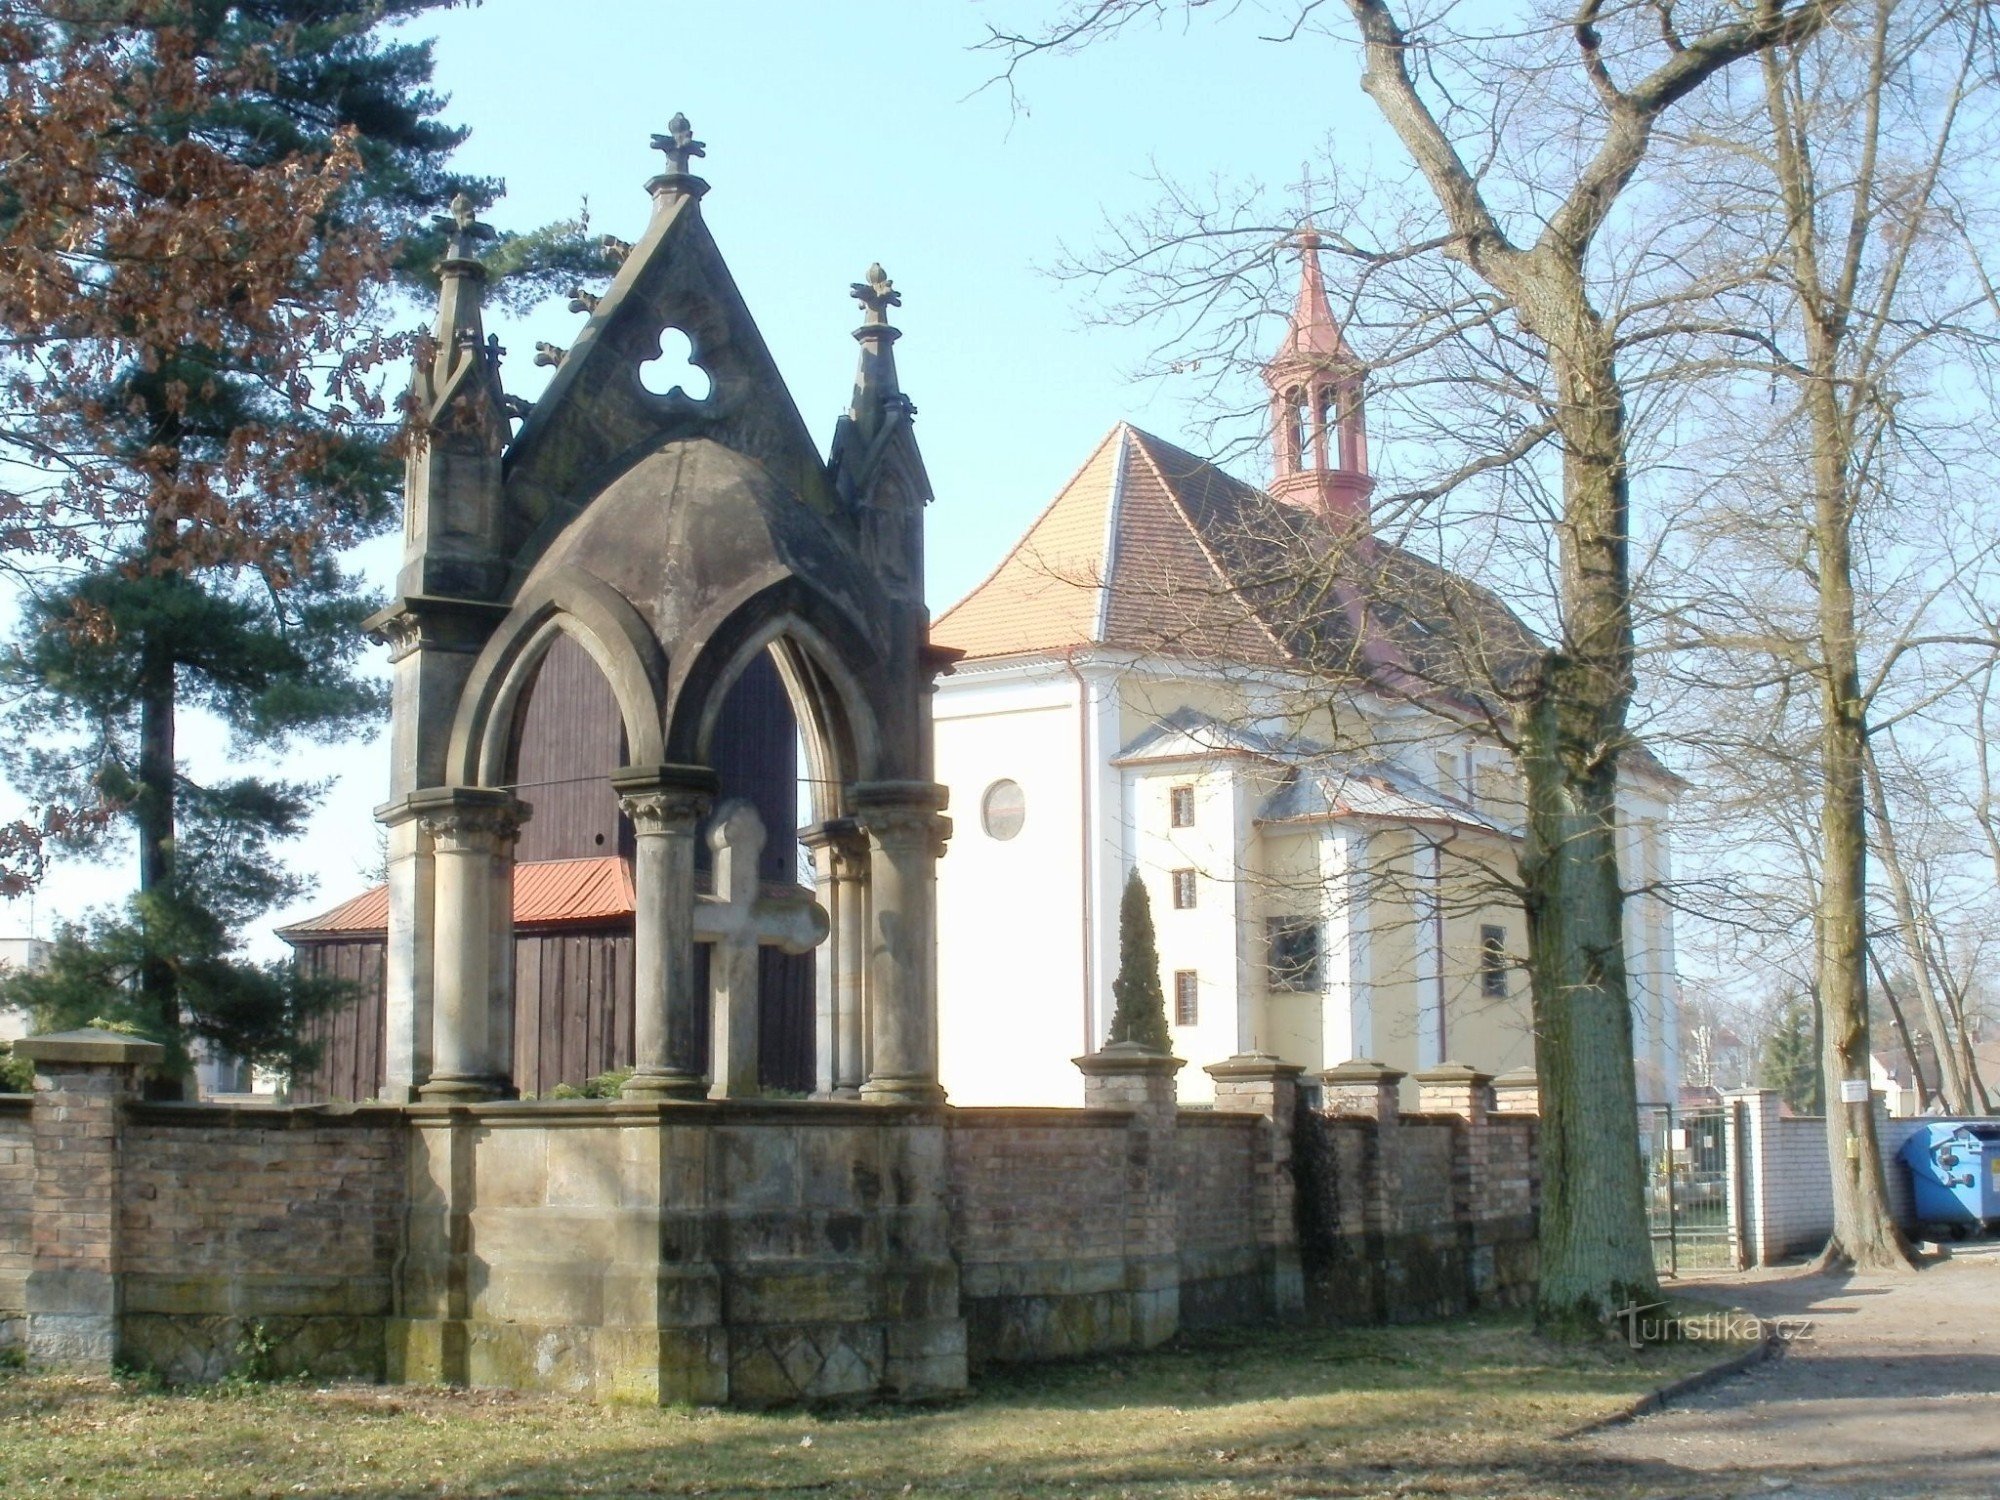 Borohrádek - church of St. Michael the Archangel